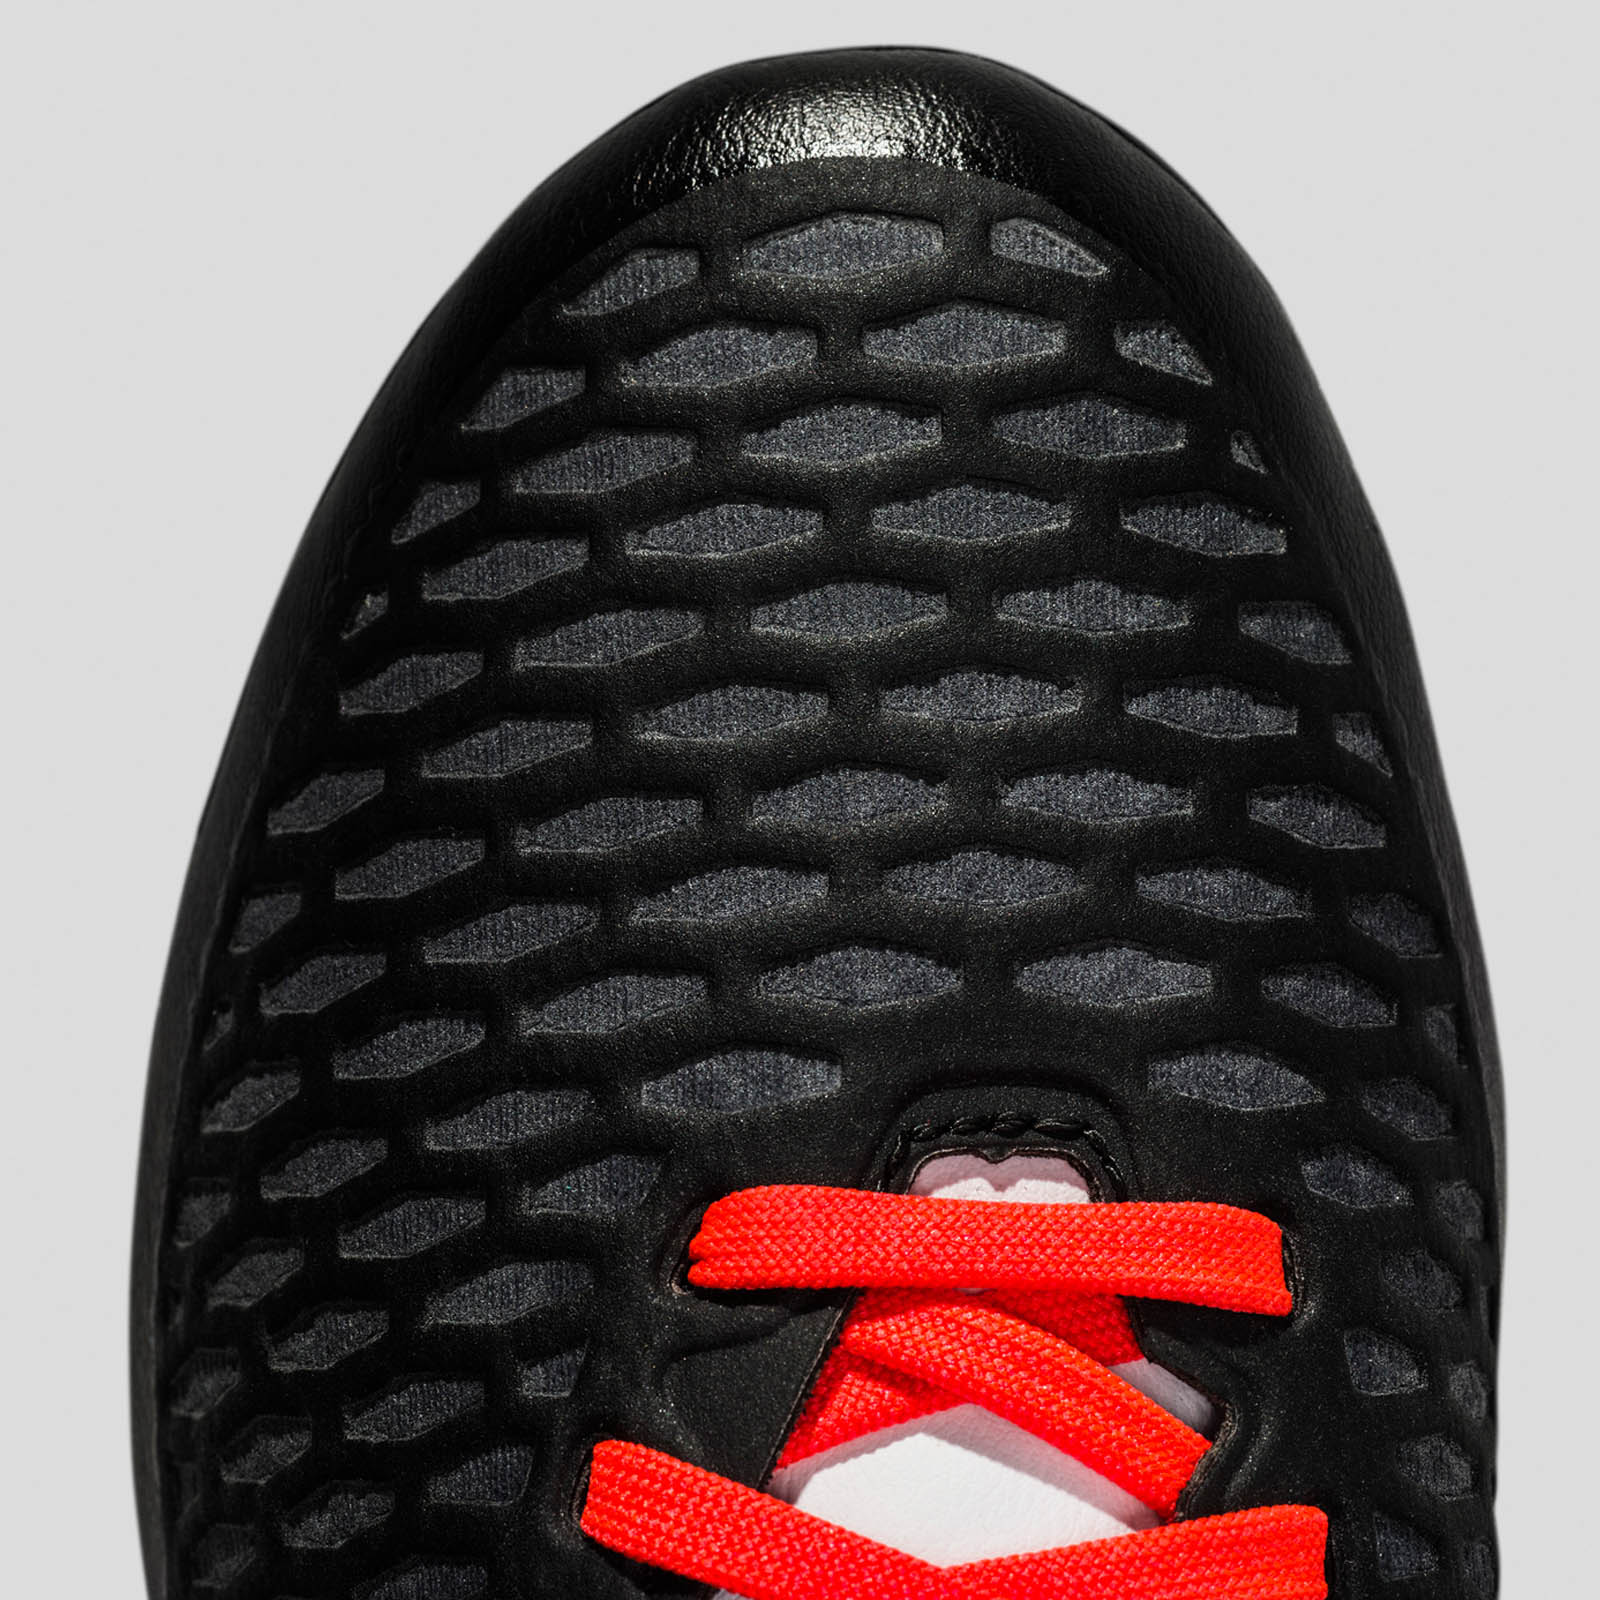 Black / Red Nike Magista Opus 2016 Women's Boots Released - Footy Headlines